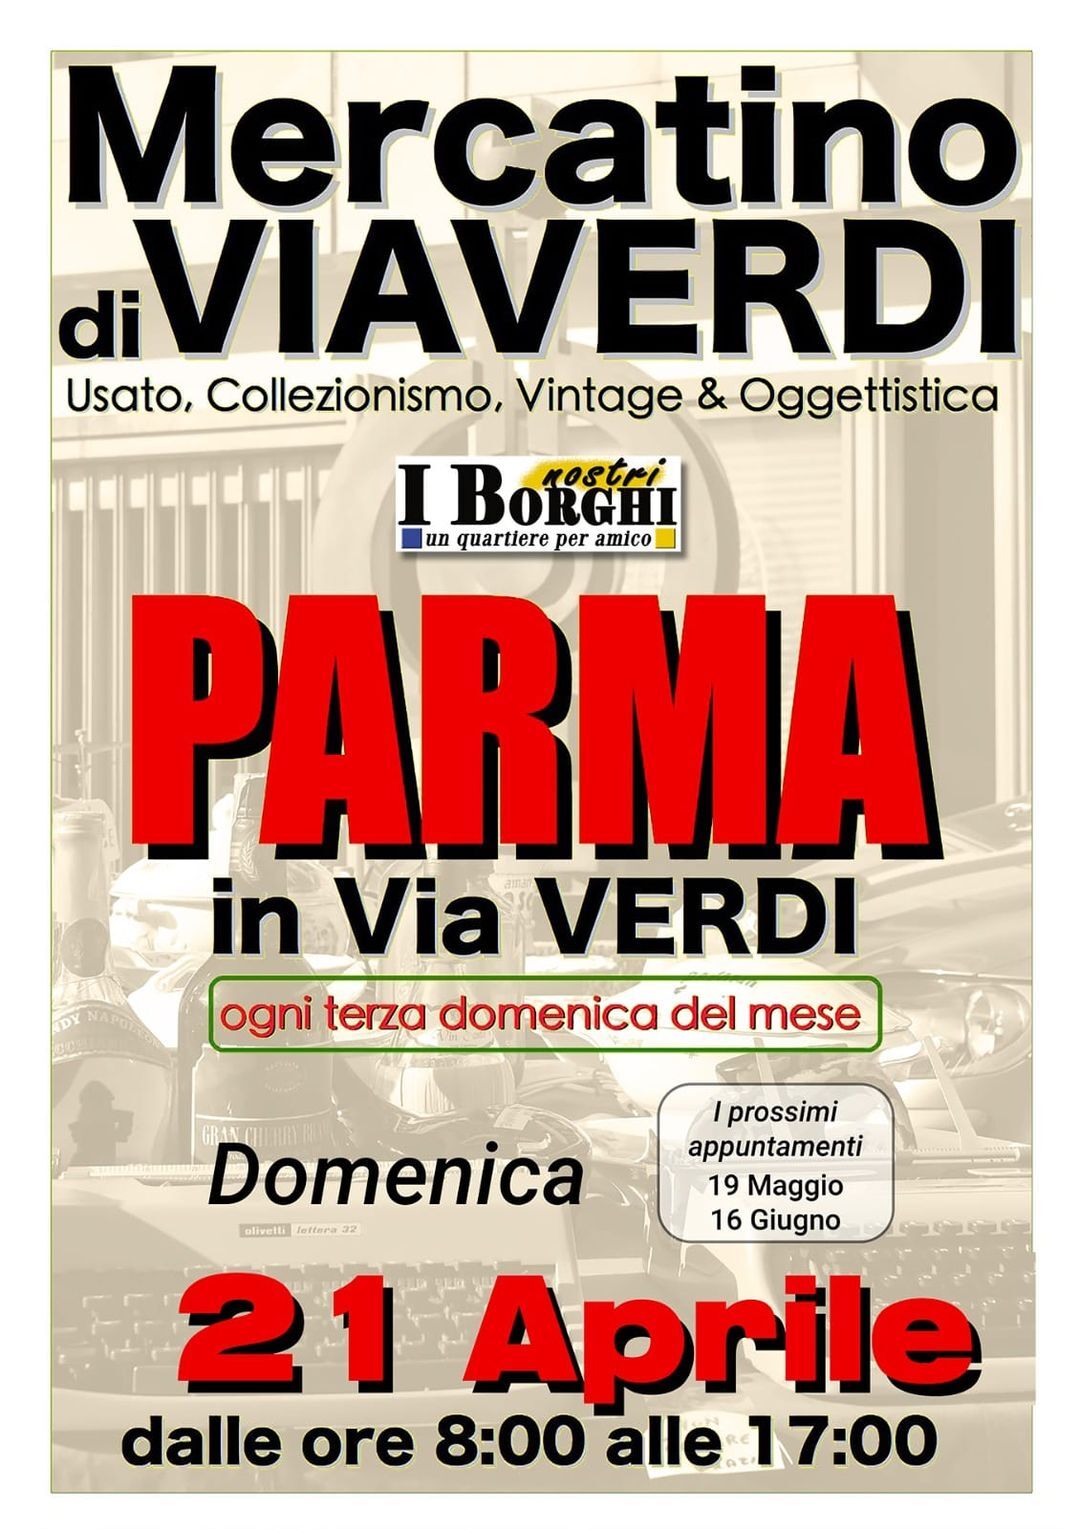 A Parma "Mercatino di Via Verdi"